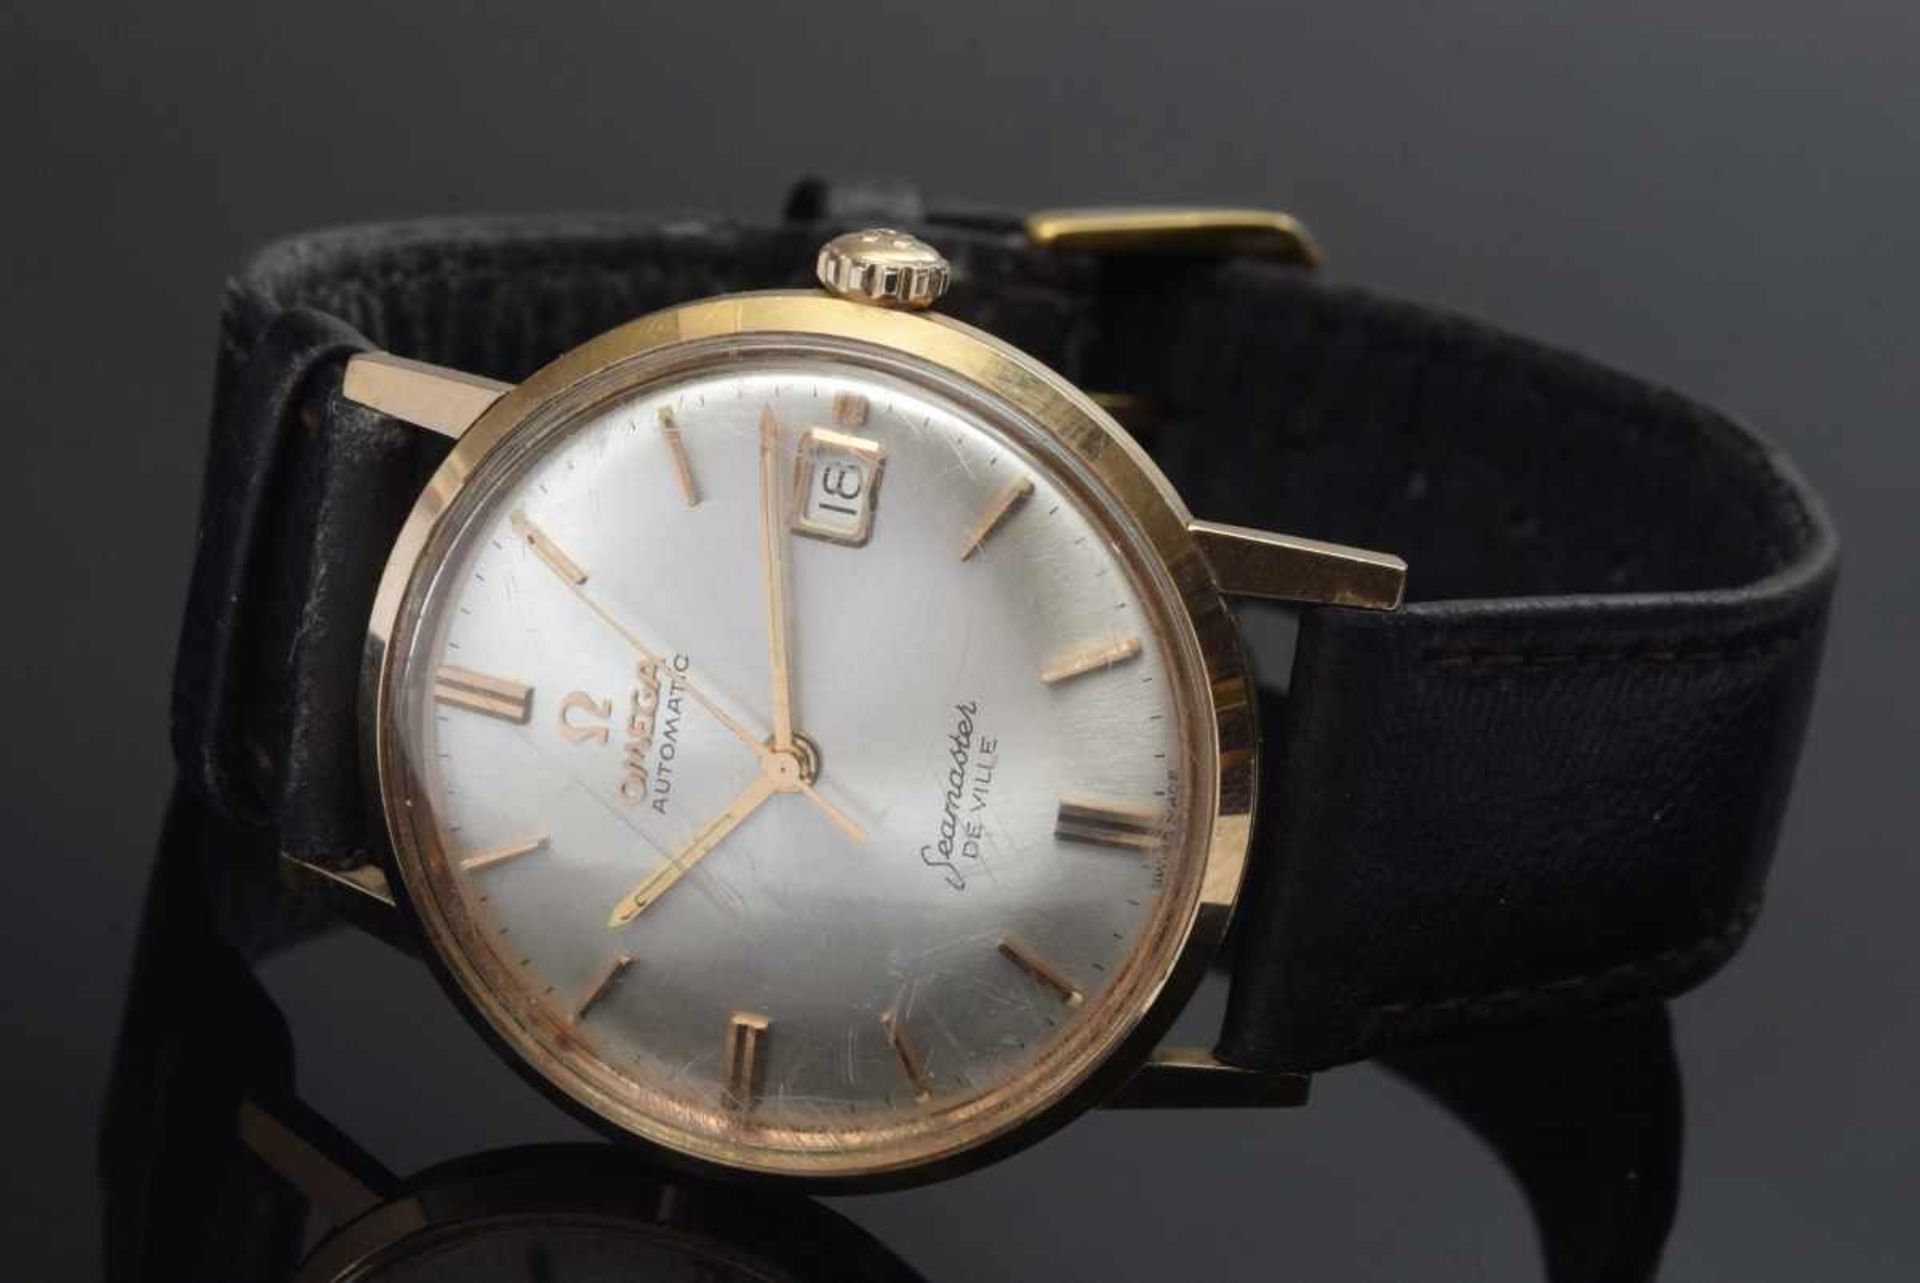 GG 750 Omega "Seamaster de Ville" men's watch, chronograph, automatic, silver-coloured dial with bar